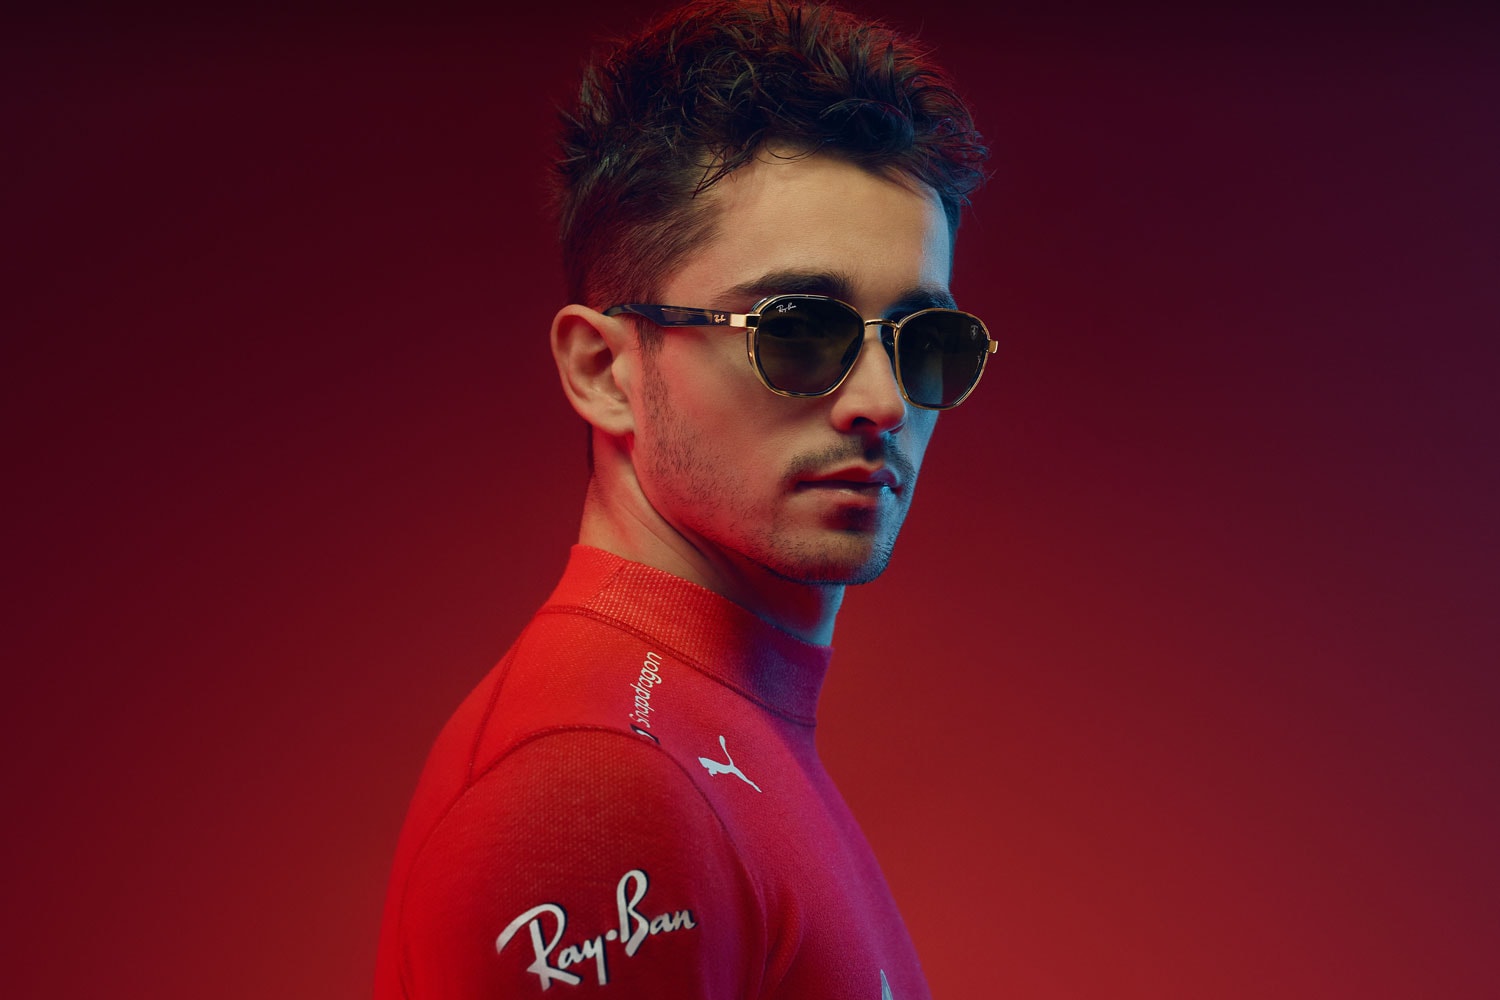 Ray Ban Ferrari Sunglasses 